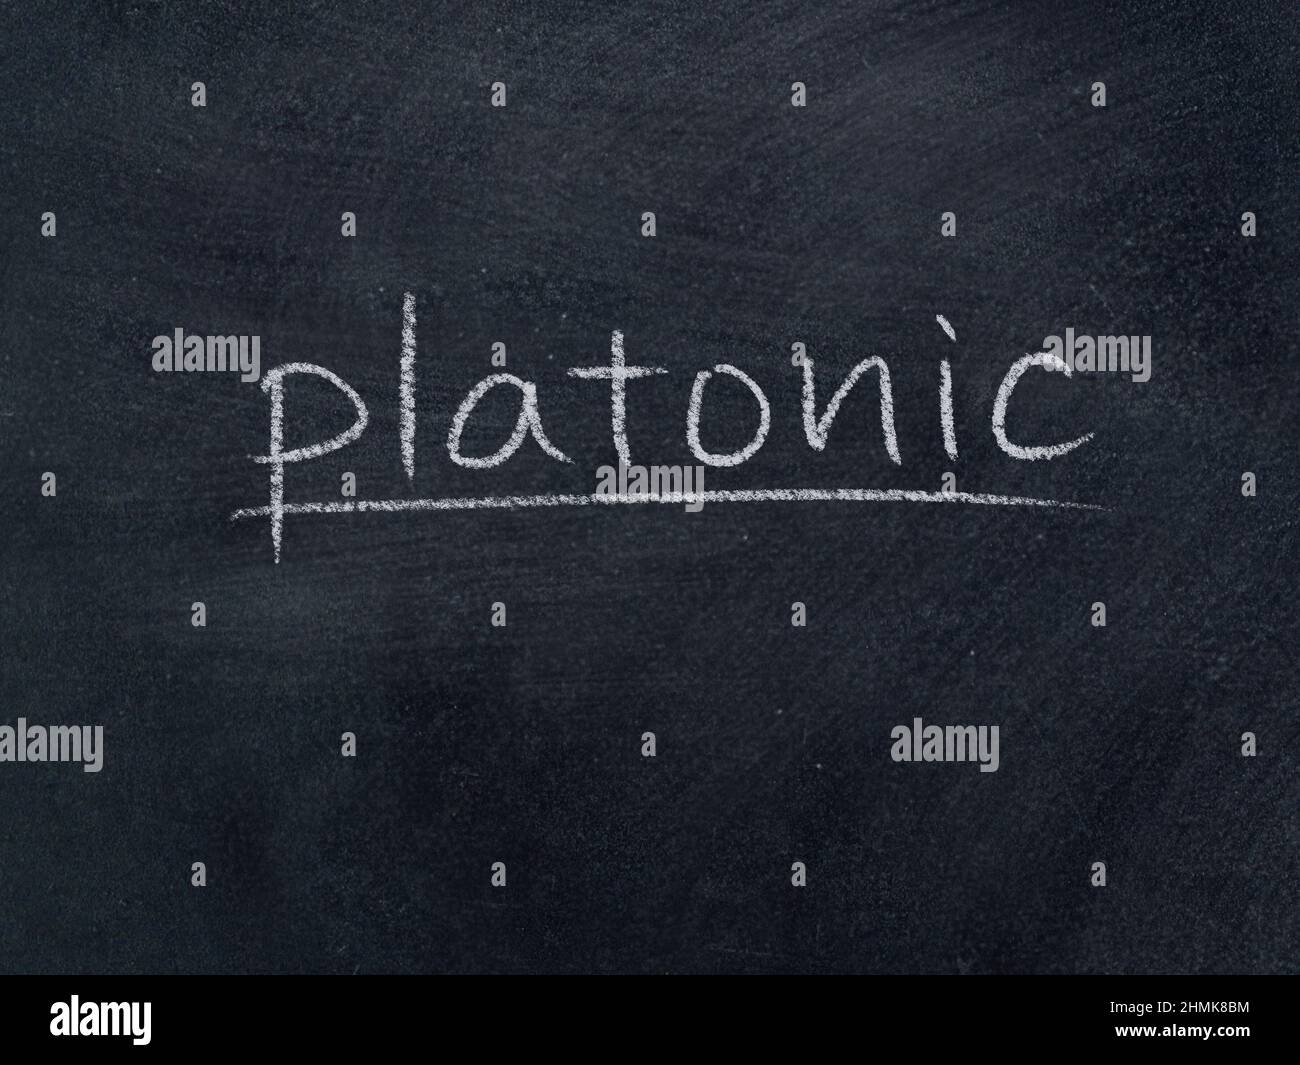 platonic concept word on blackboard background Stock Photo